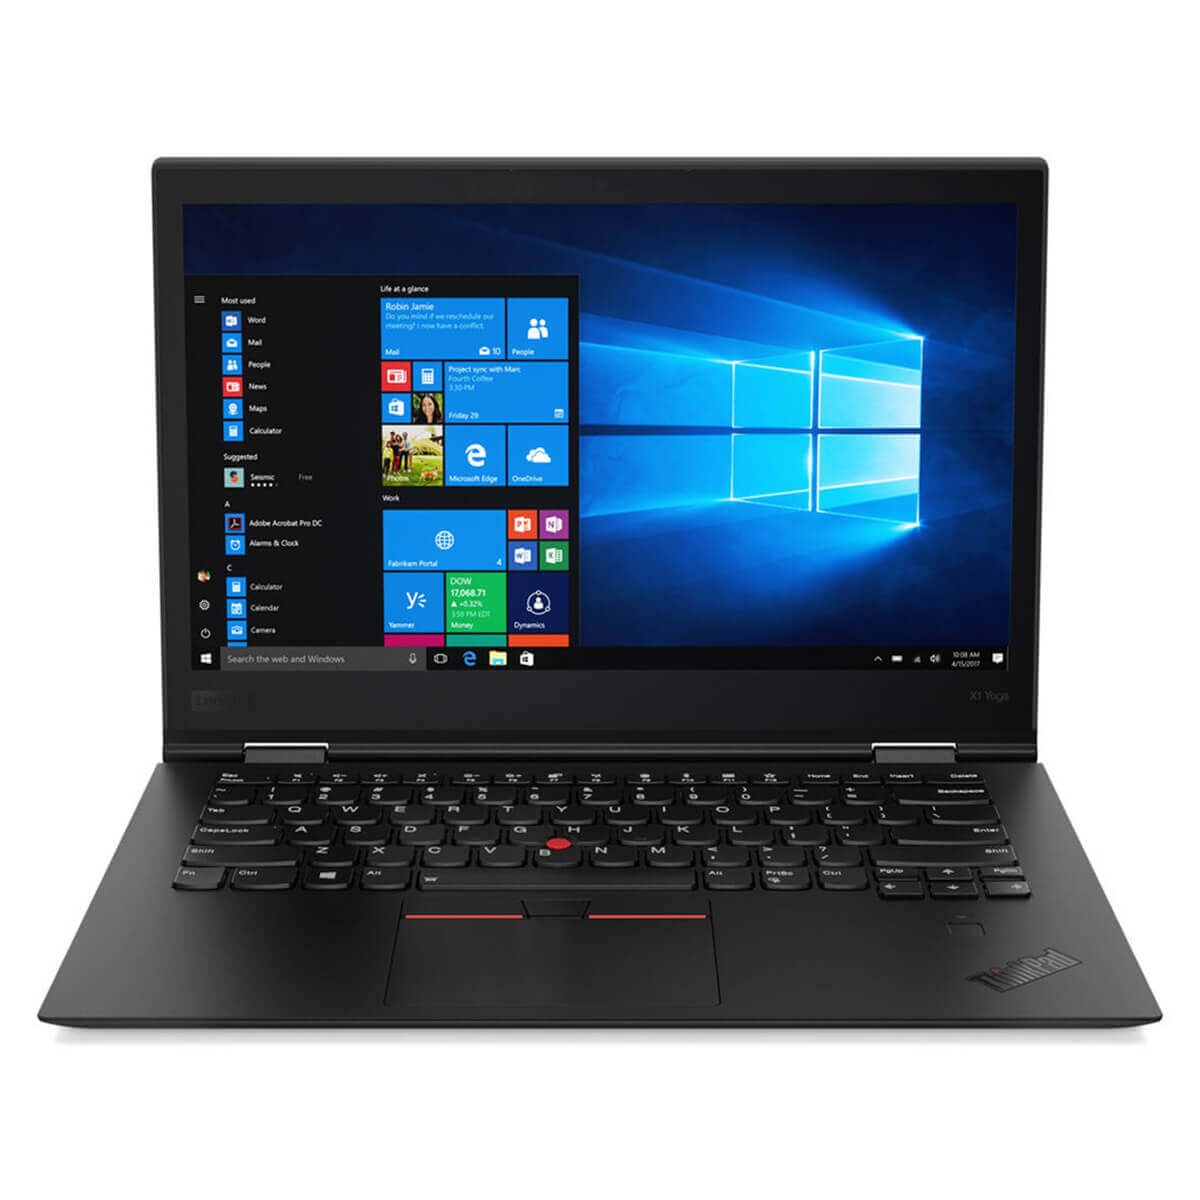 Laptop Lenovo ThinkPad X1 Carbon Yoga Gen 3 Core i7-8650U, Ram 16GB, 512GB SSD, 14.0 Inch FHD TouchScreen